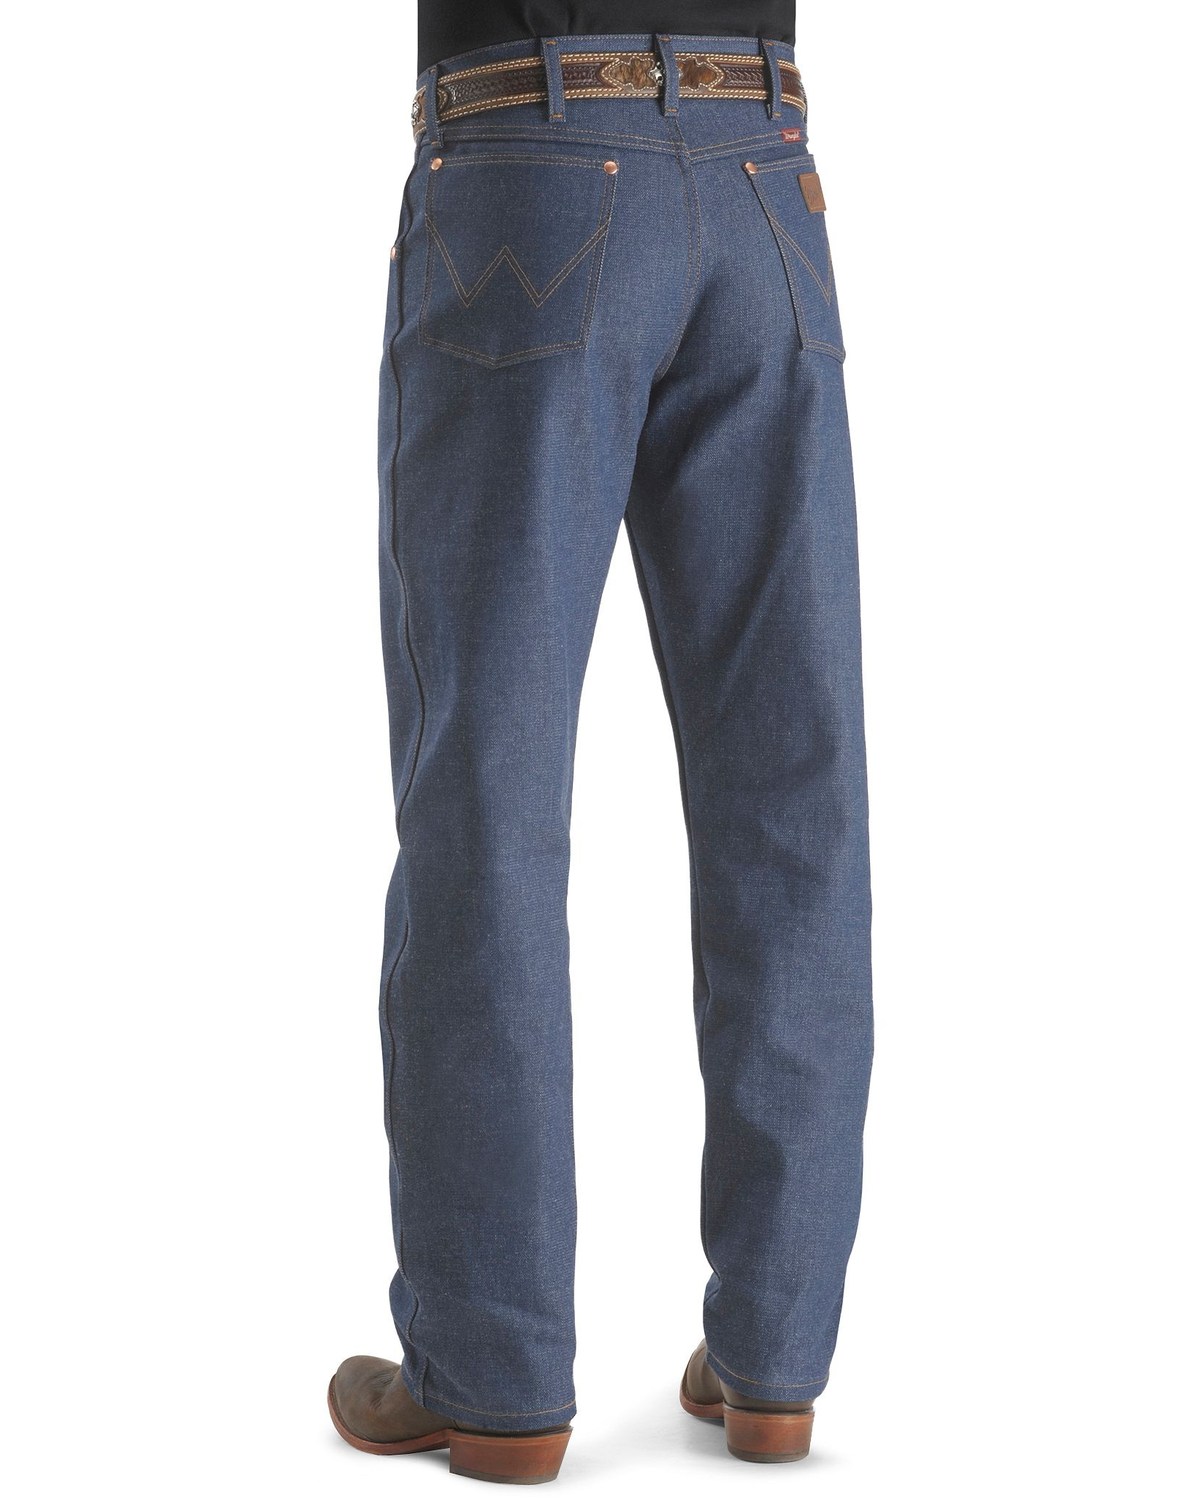 Wrangler Men's Cowboy Cut Rigid Relaxed Fit Jeans